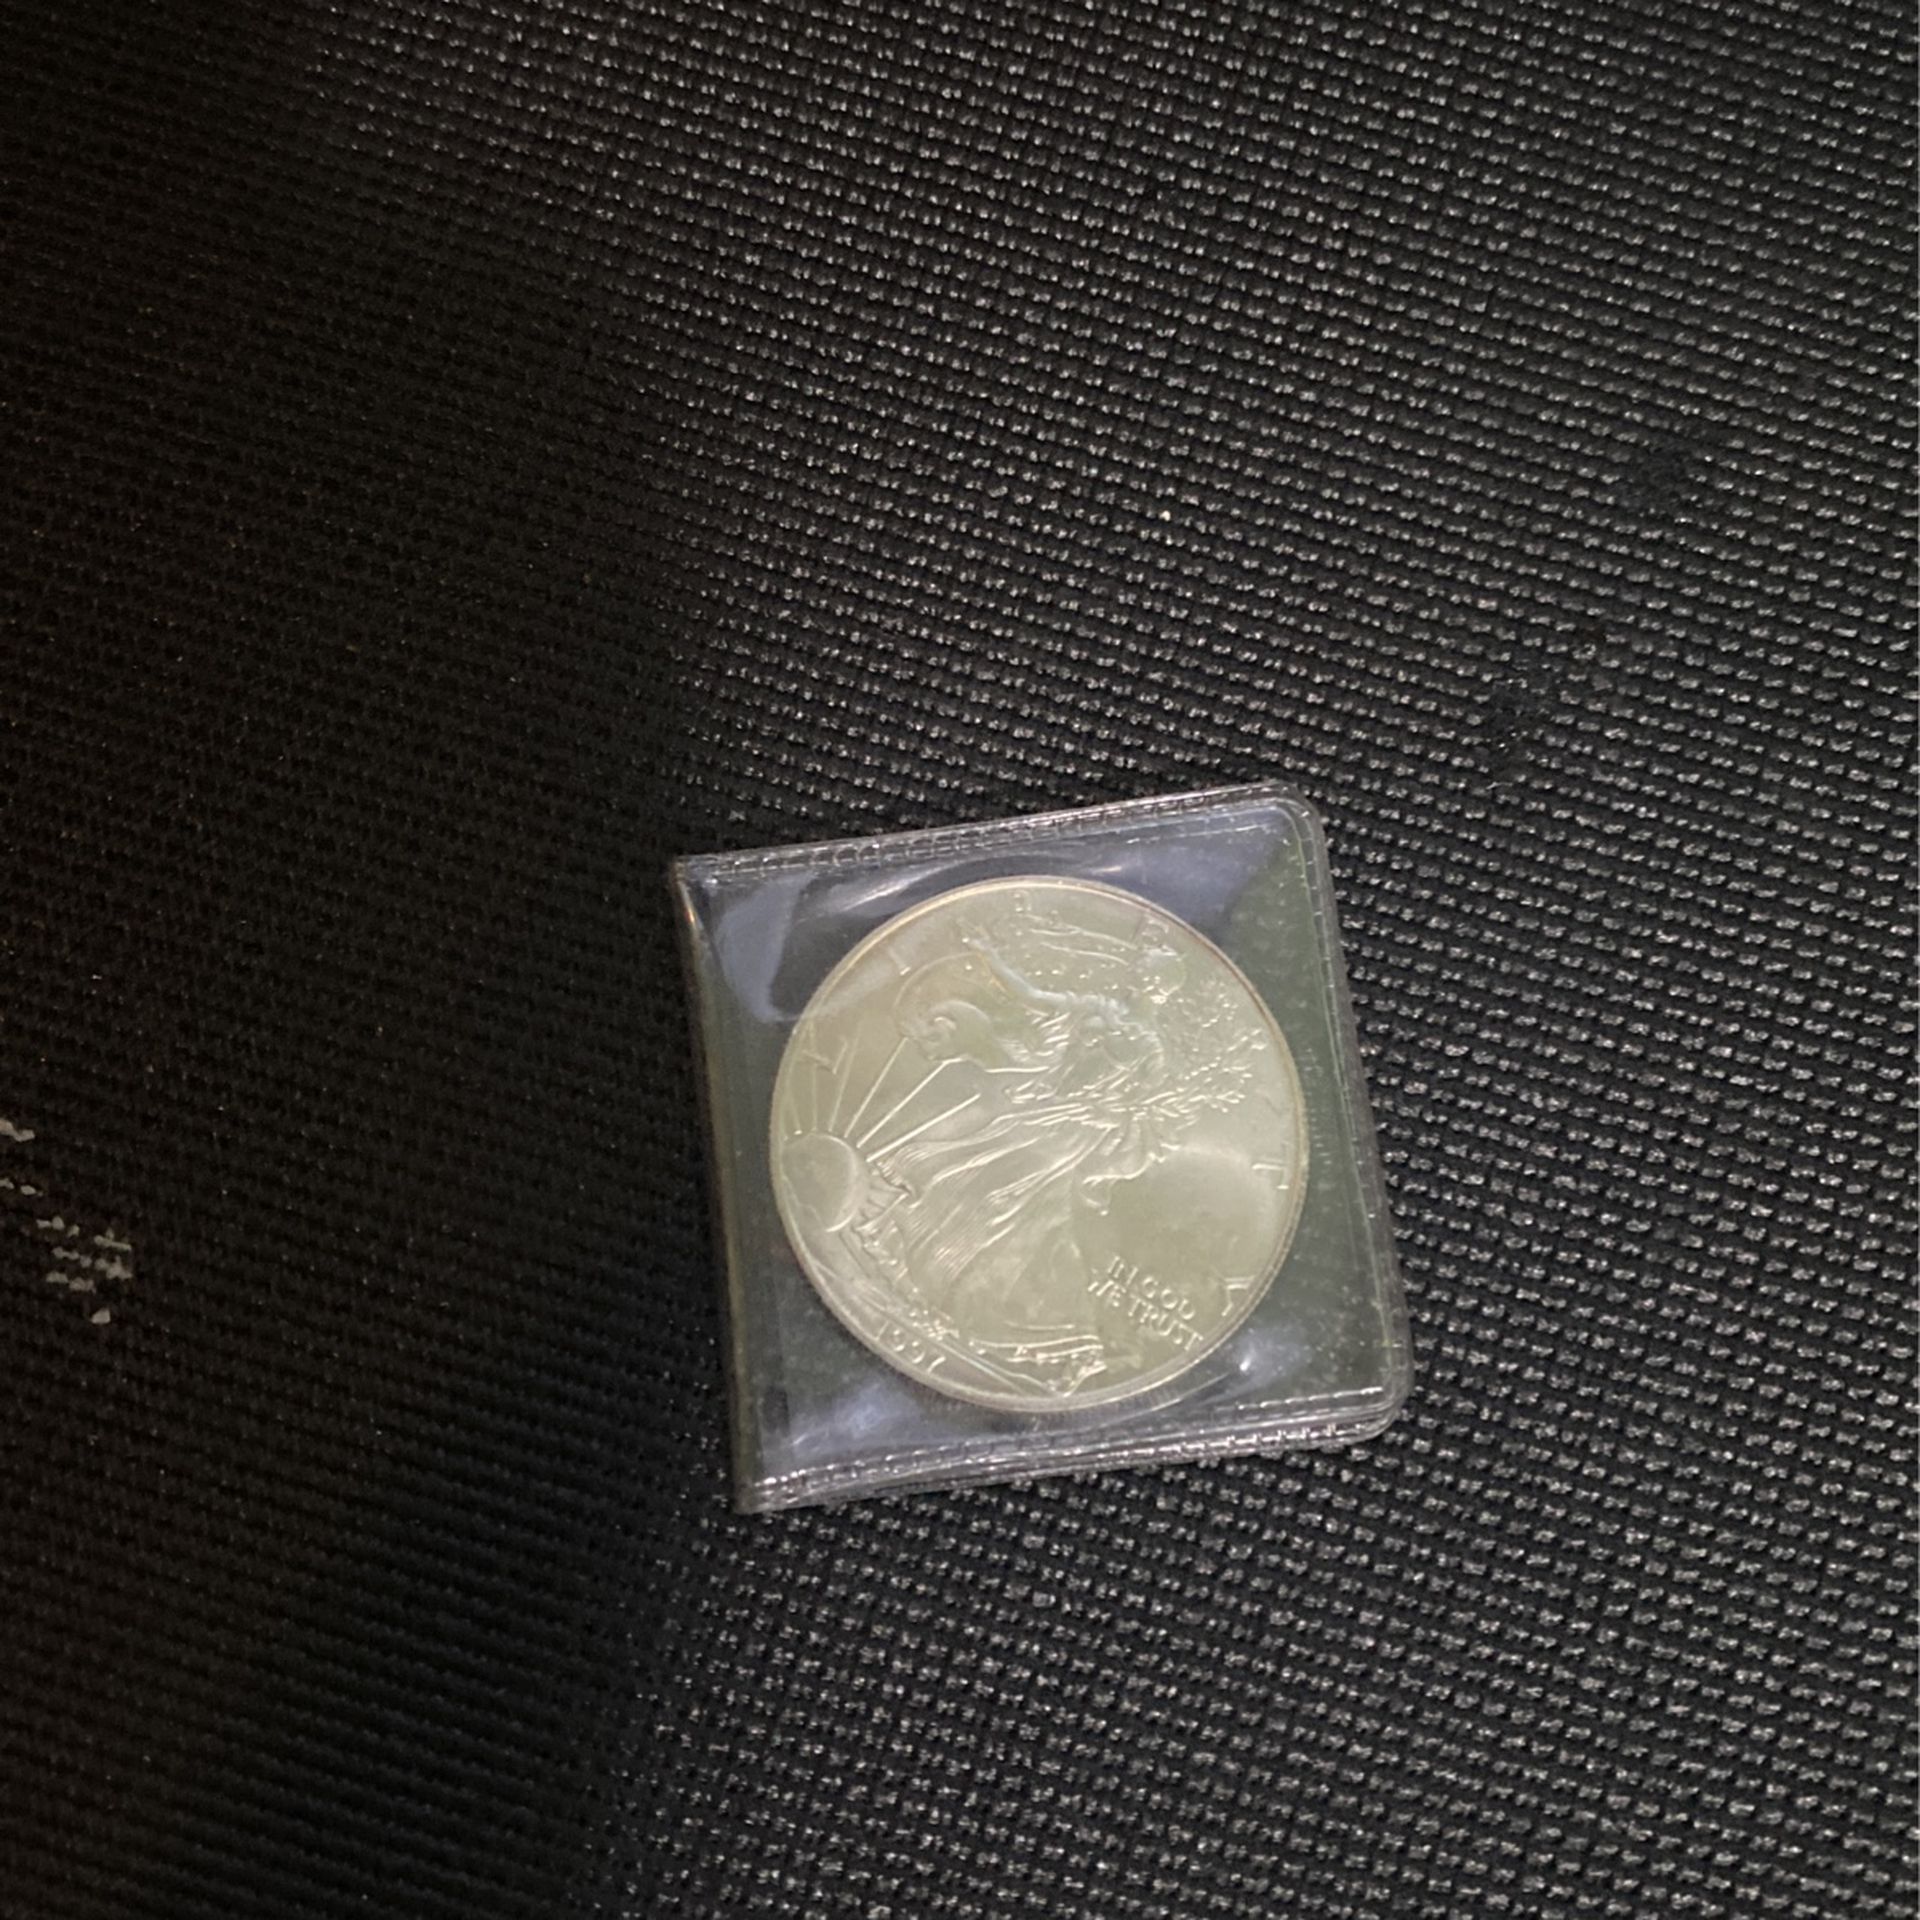 1997 1oz Fine Silver Dollar Coin 30$